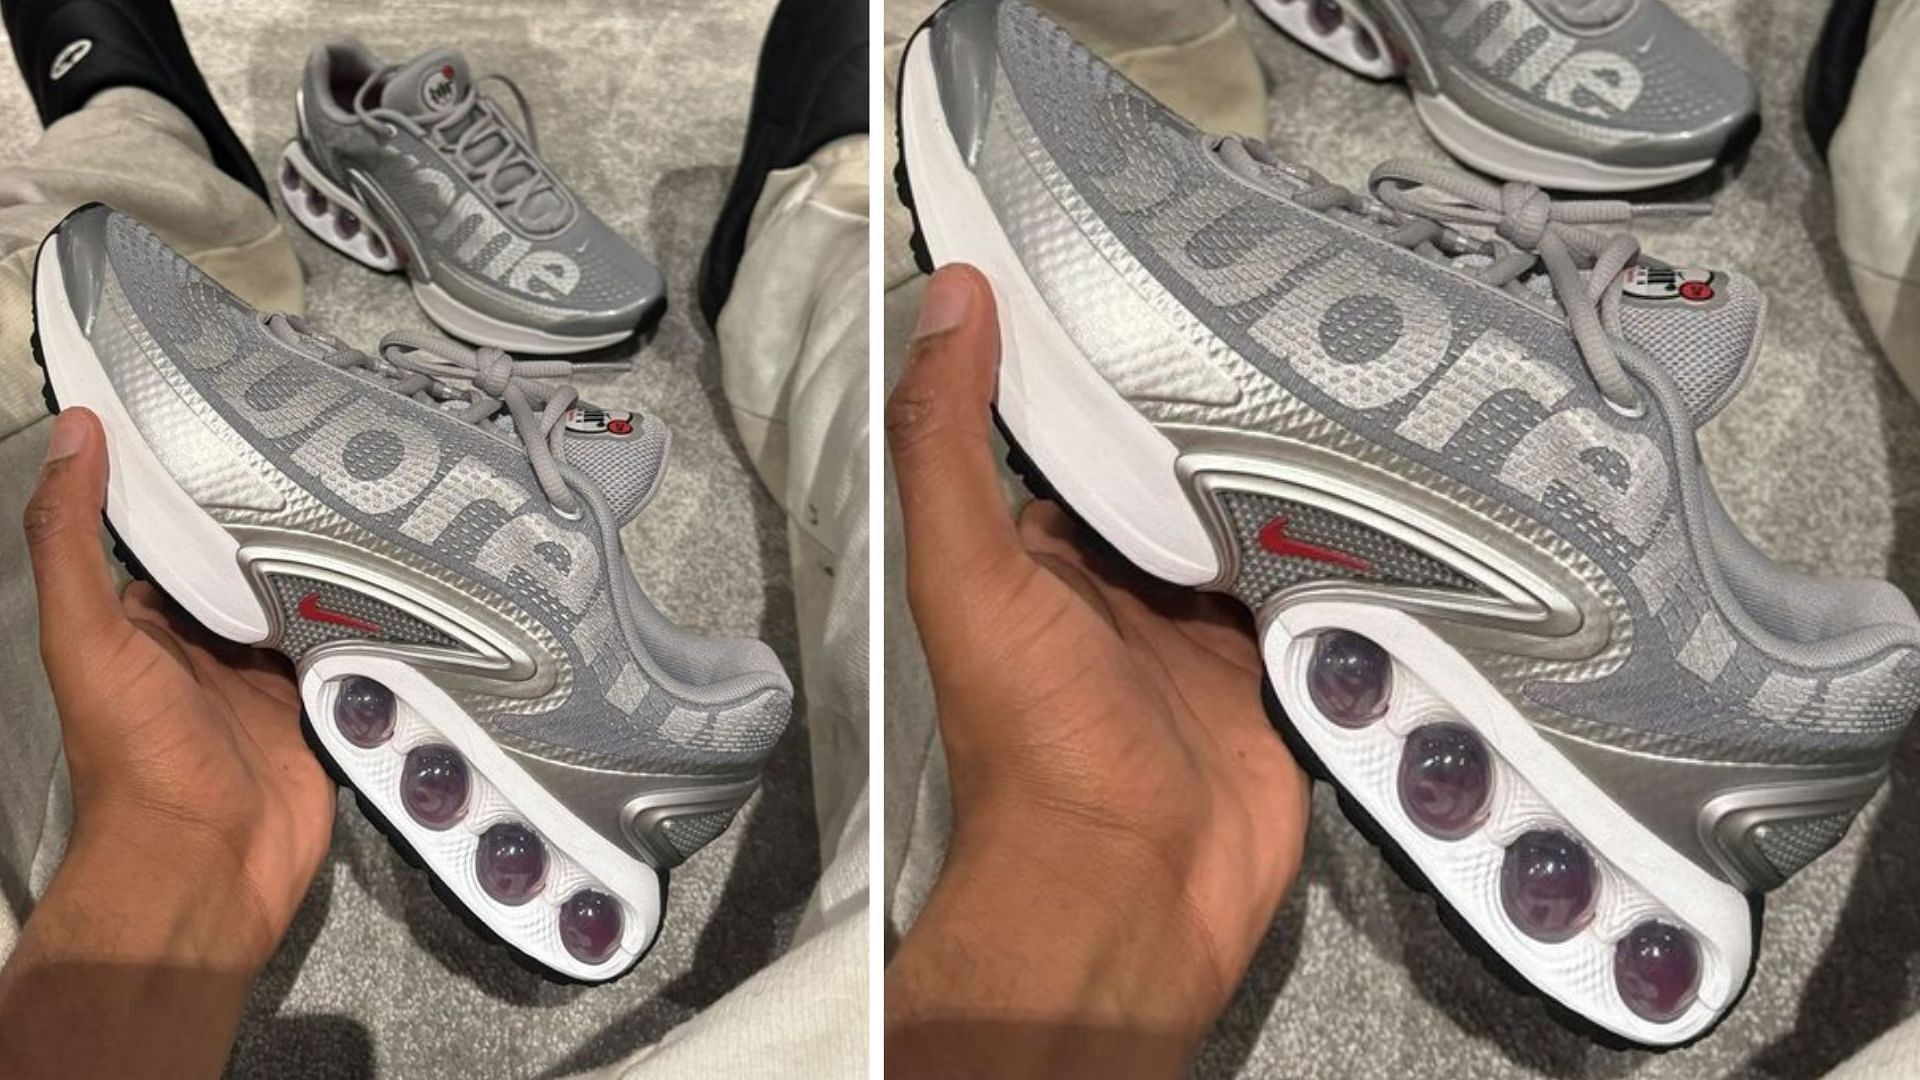 Supreme x Nike Air Max Dn Silver Bullet sneakers (Image via Instagram/@clint419)